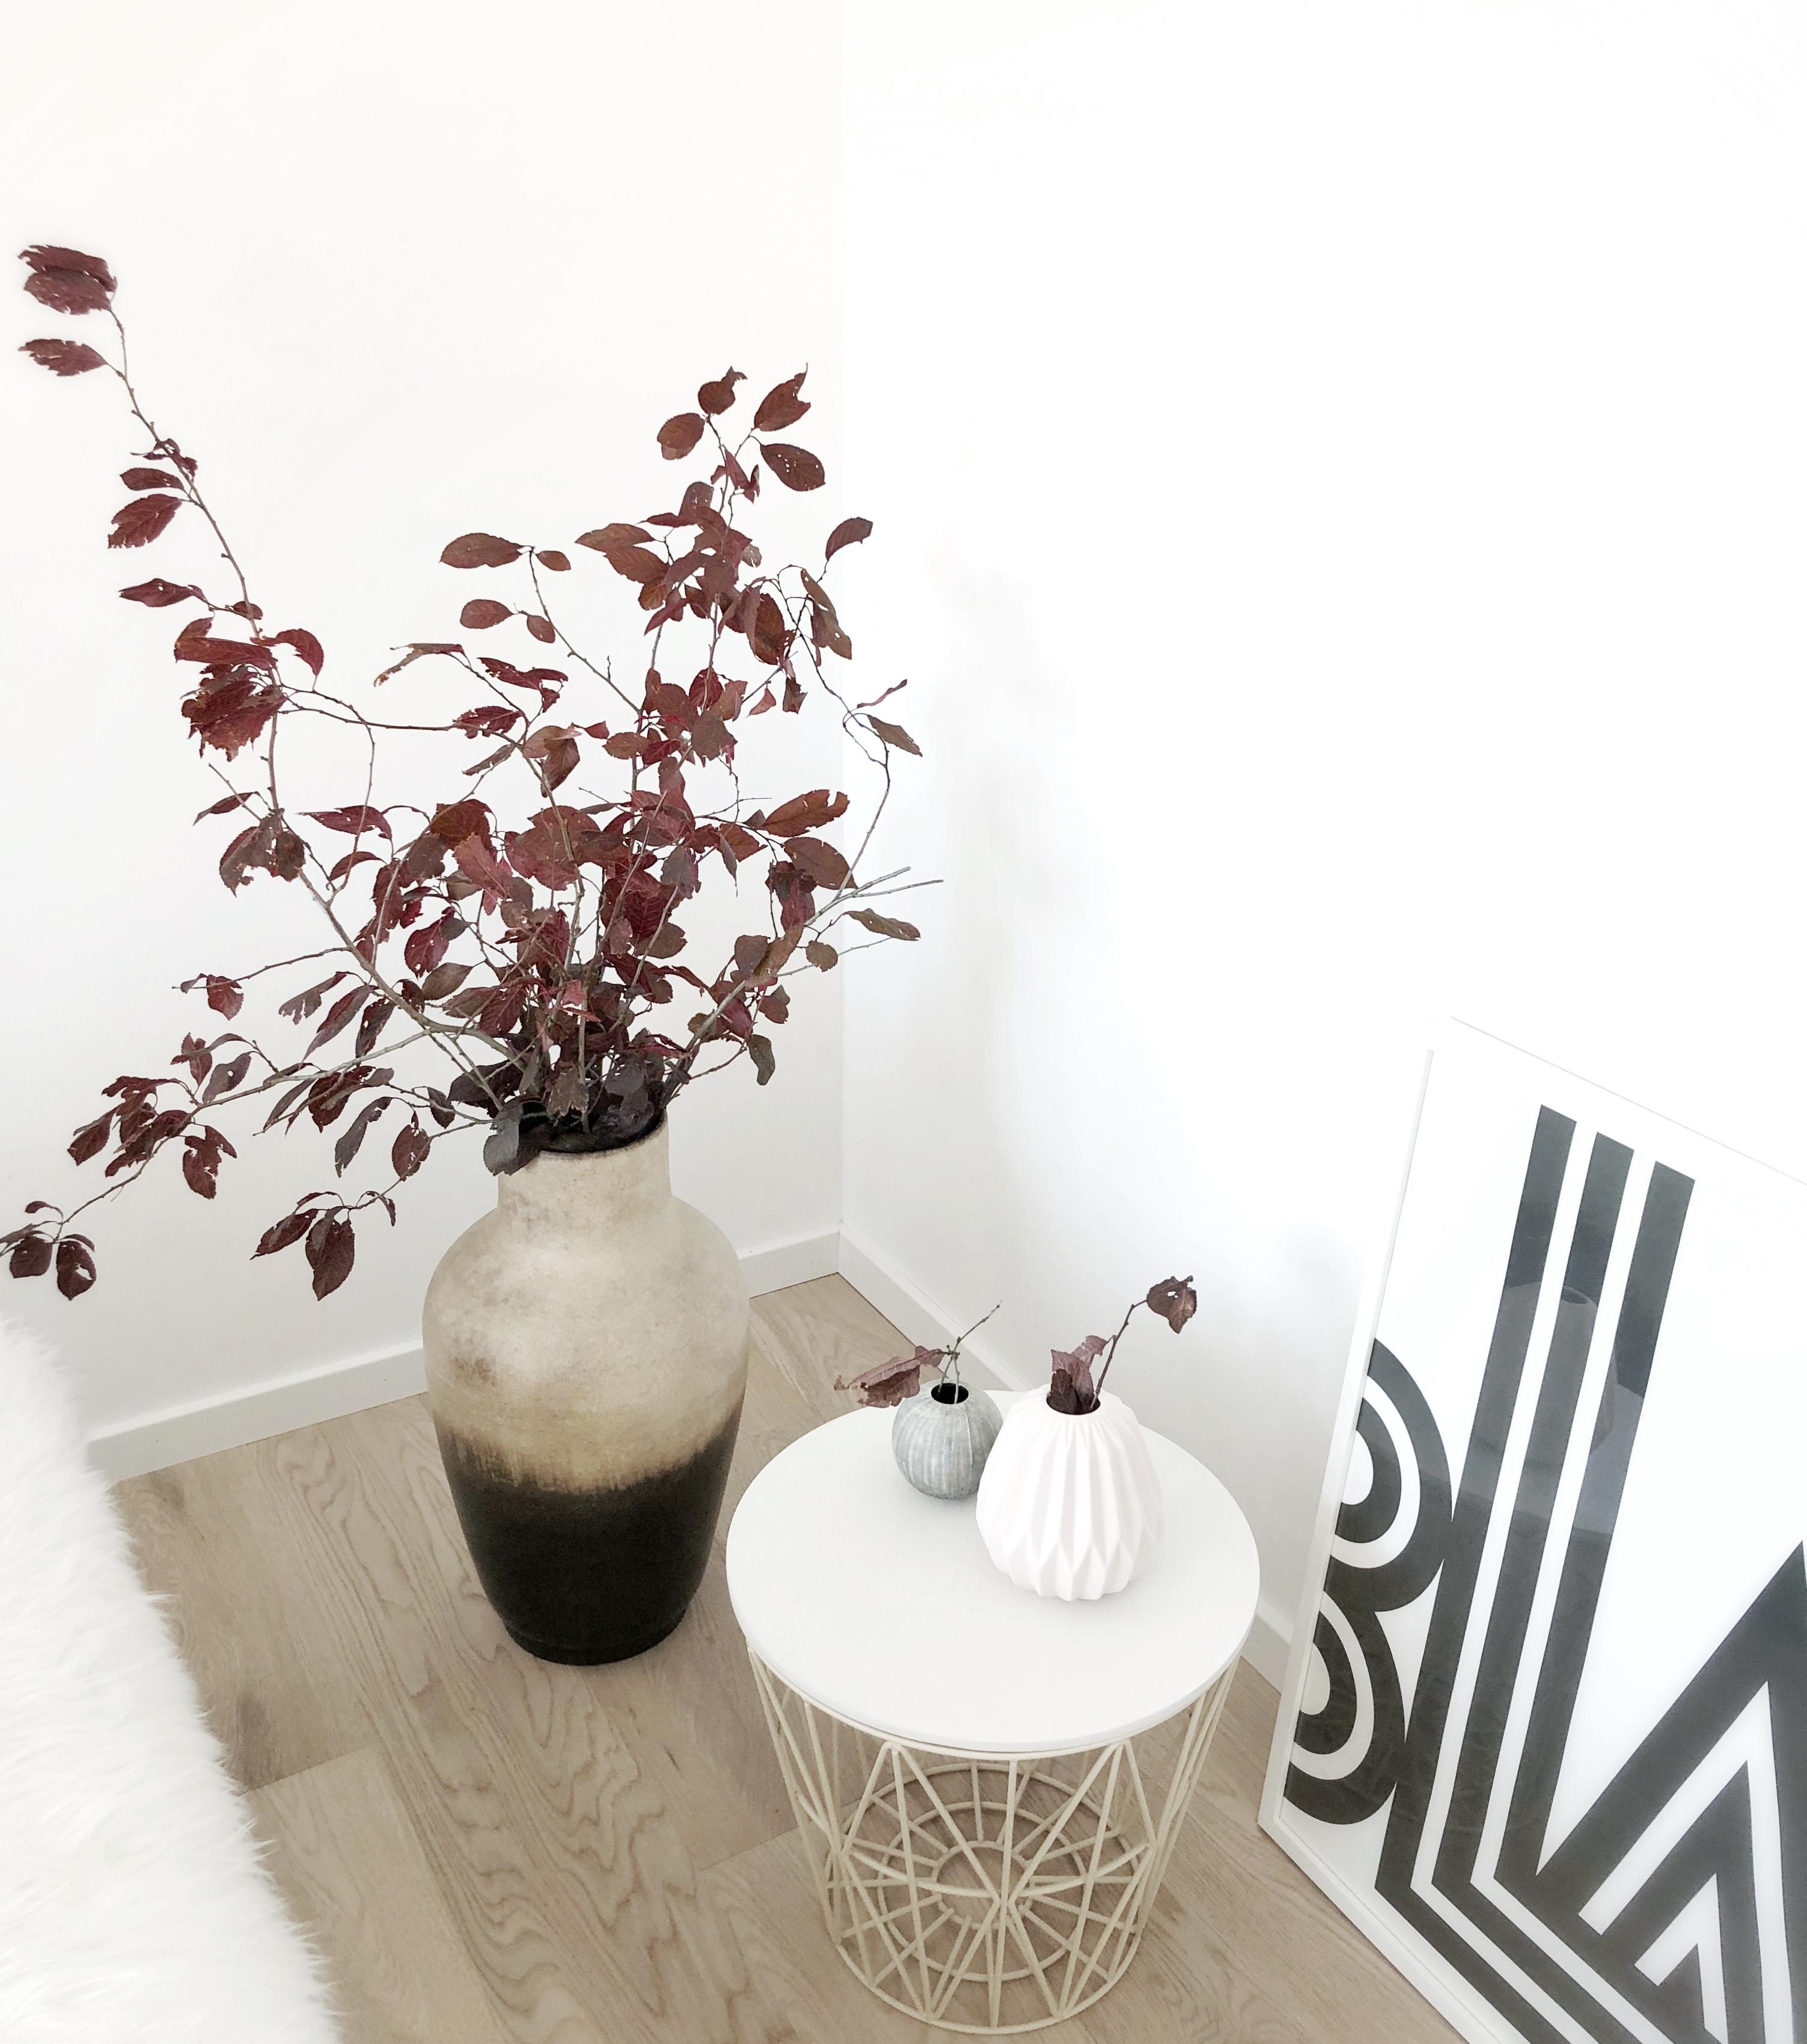 Vasenliebe
#vase#bodenvase#whitehome#whiteinterior#pure#minimalism